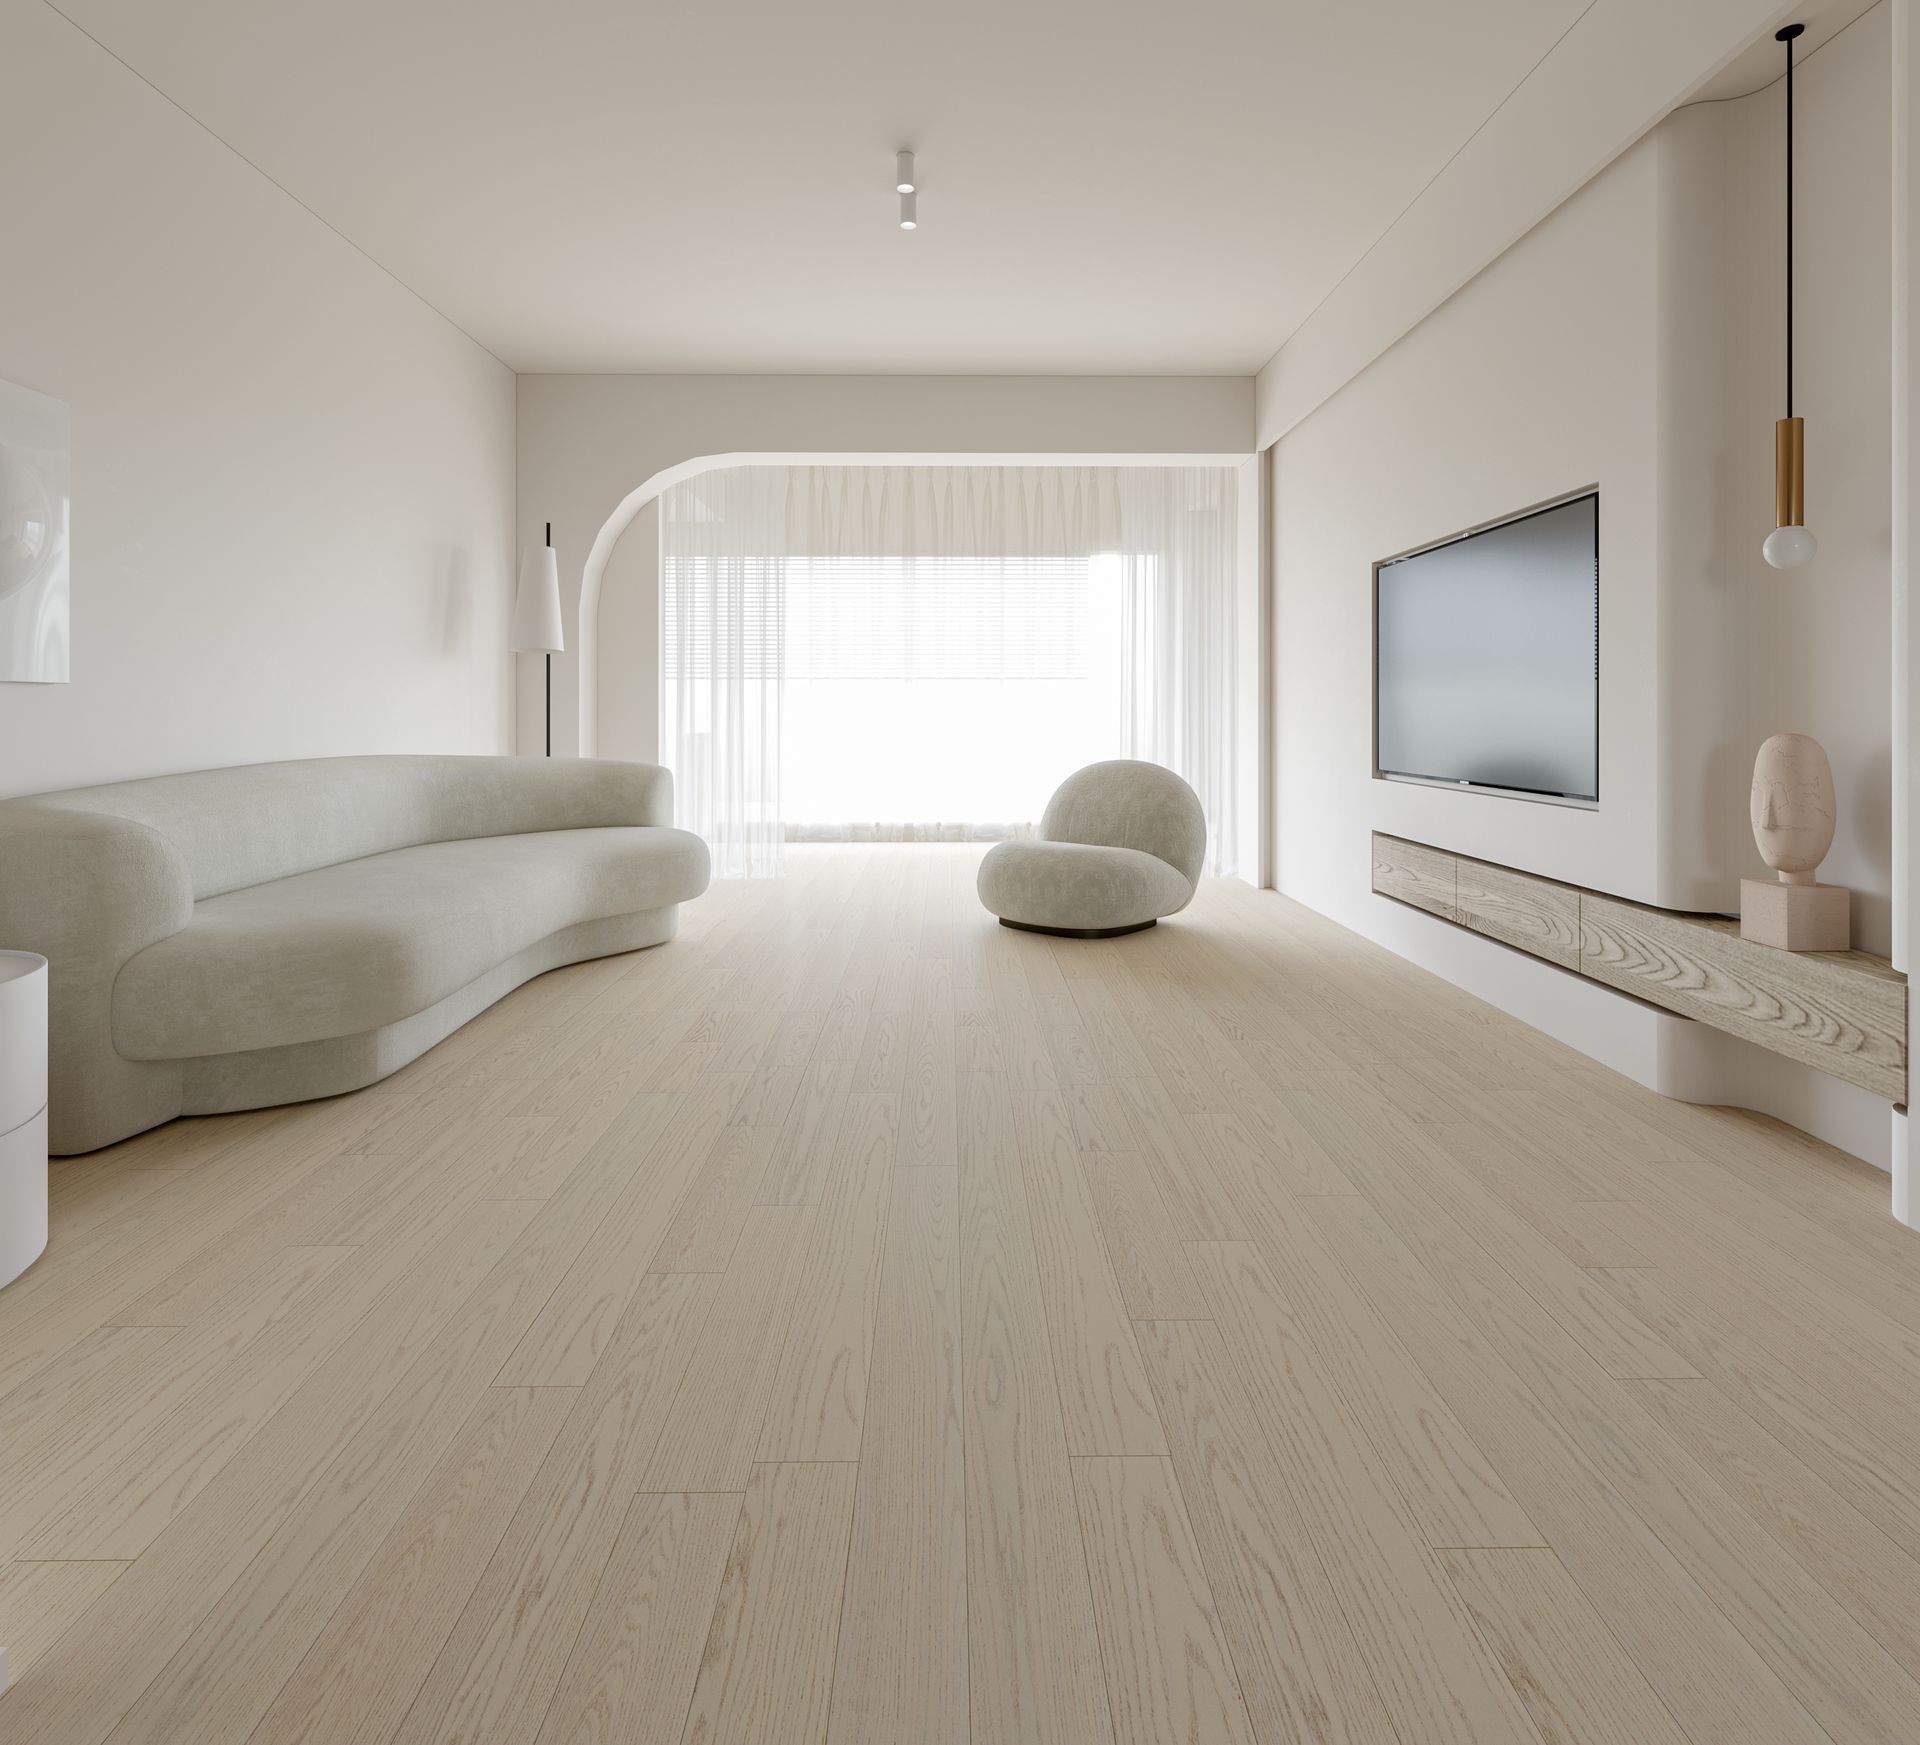 modern living room with light hardwood floors